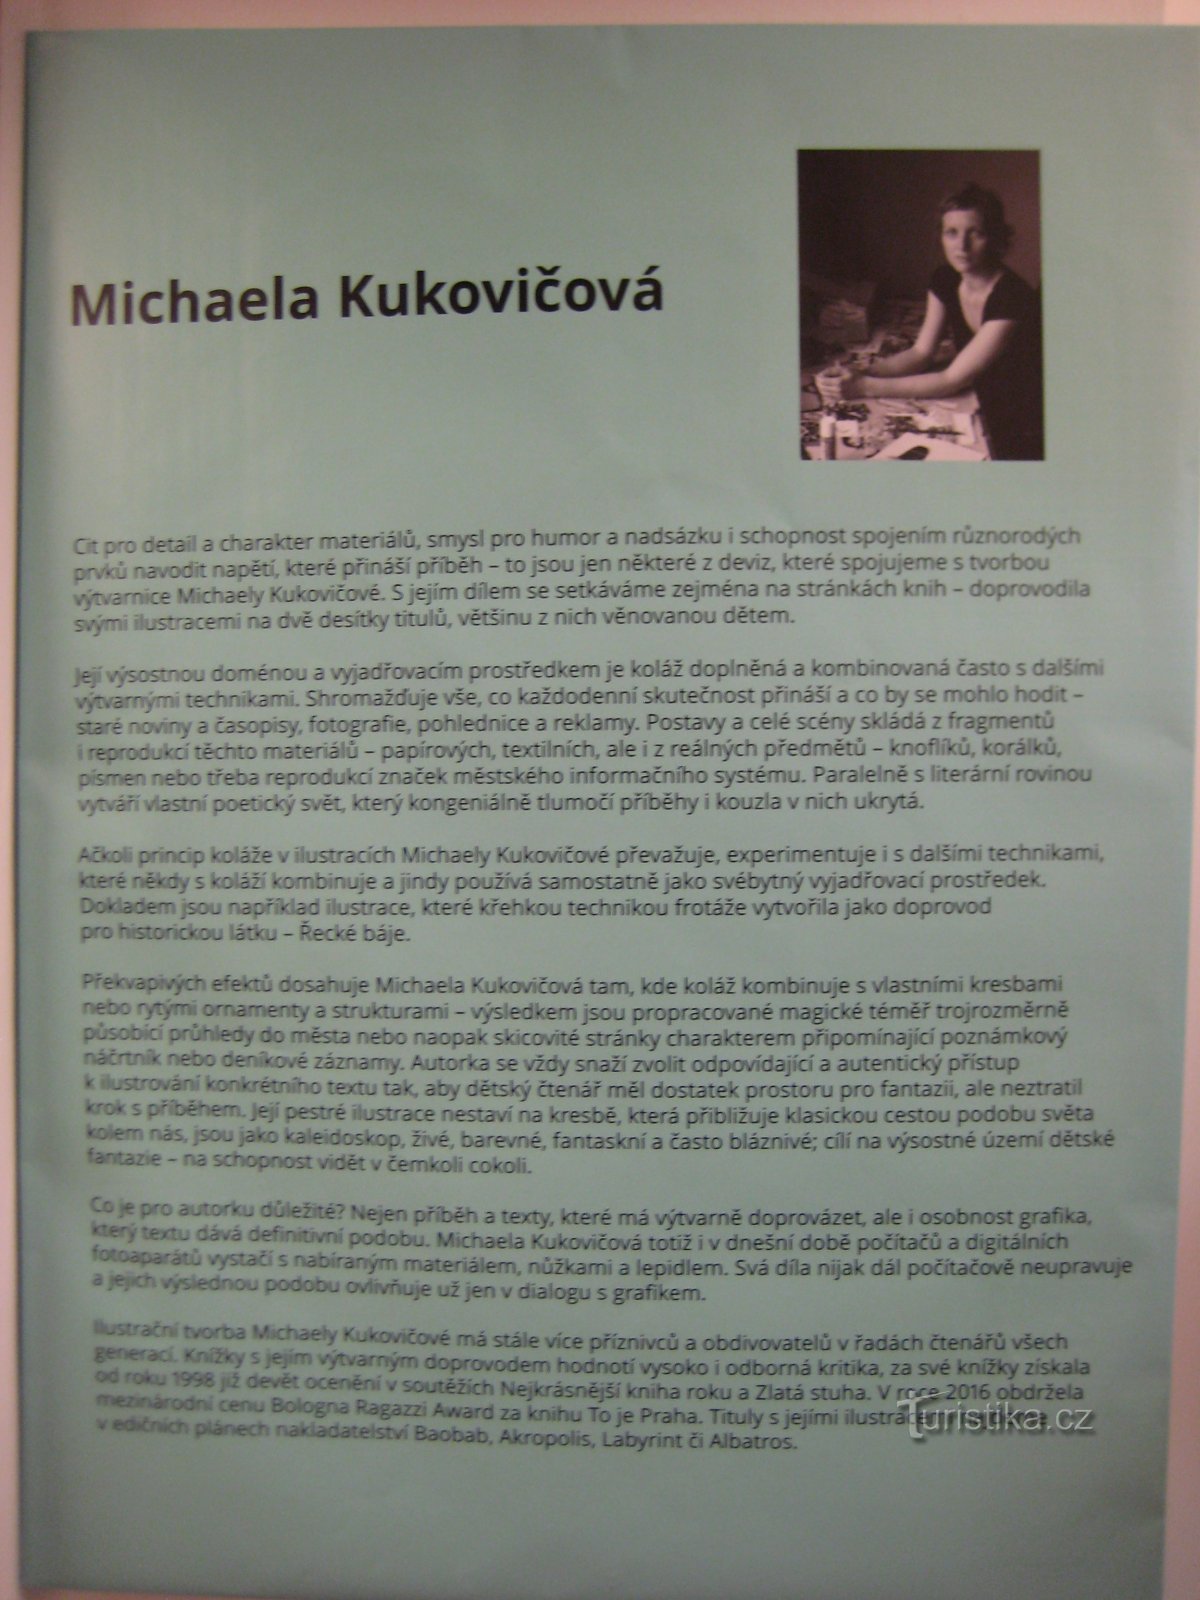 Expoziție Michaela Kukovičová - Bubluch, Duchnous și alții - Cot